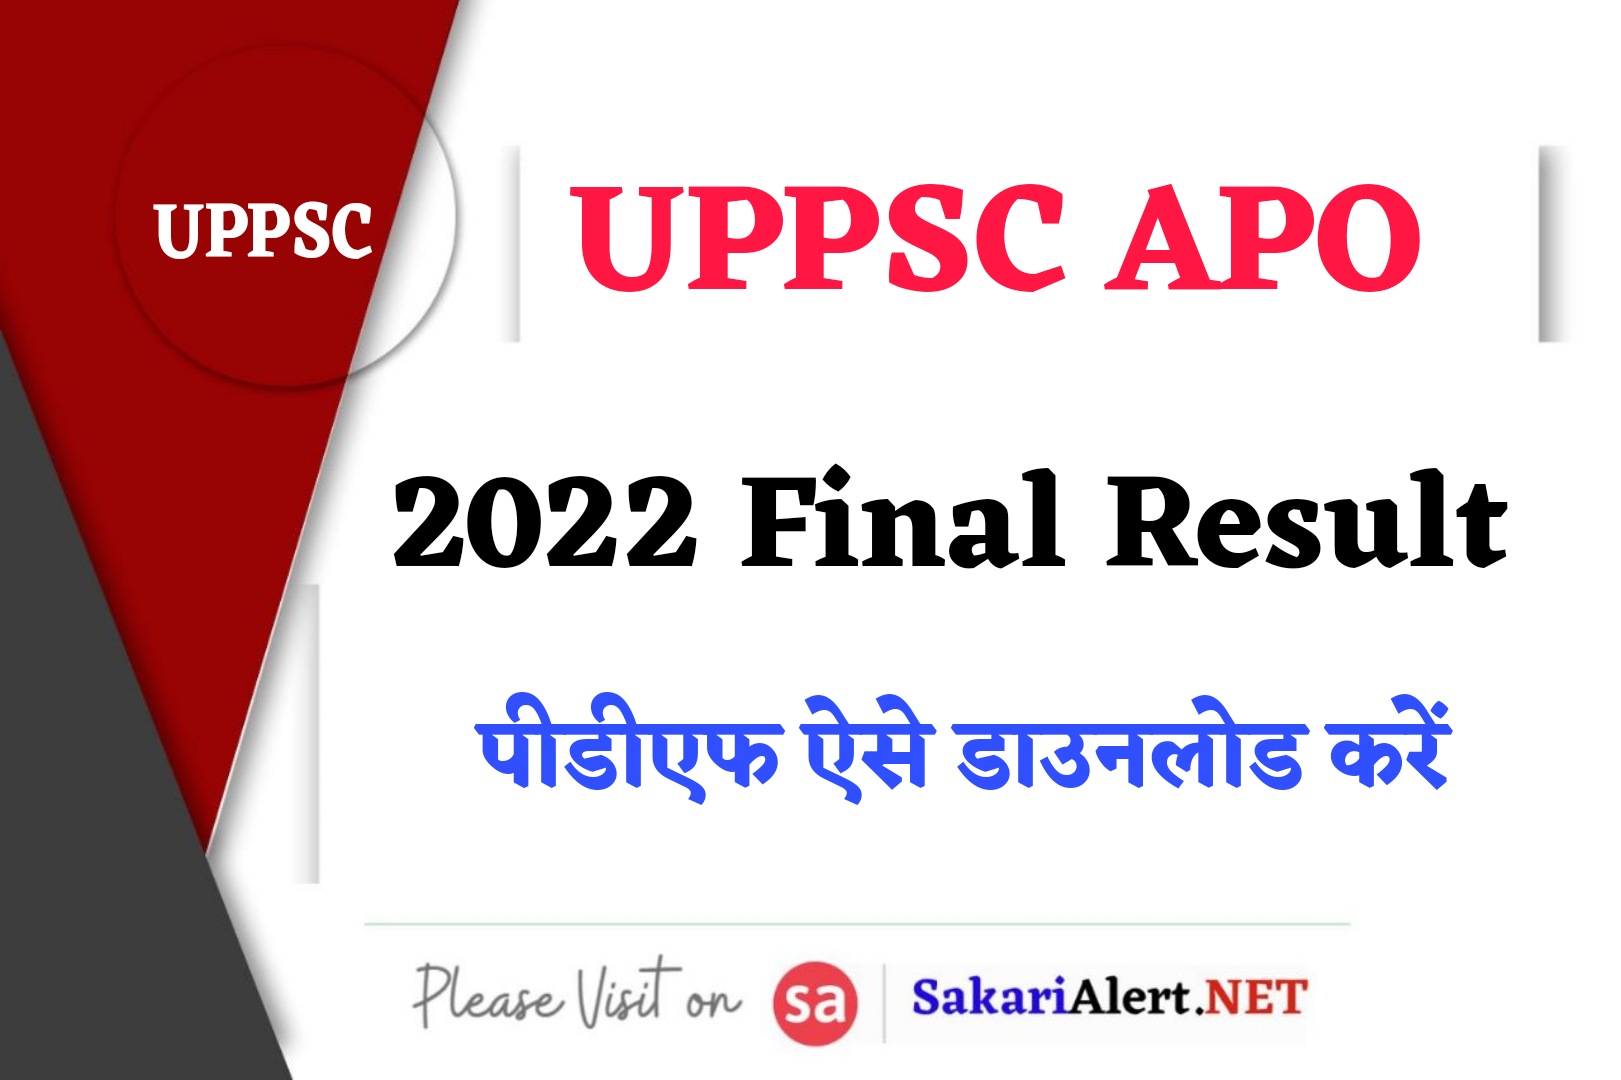 UPPSC APO 2022 Final Result